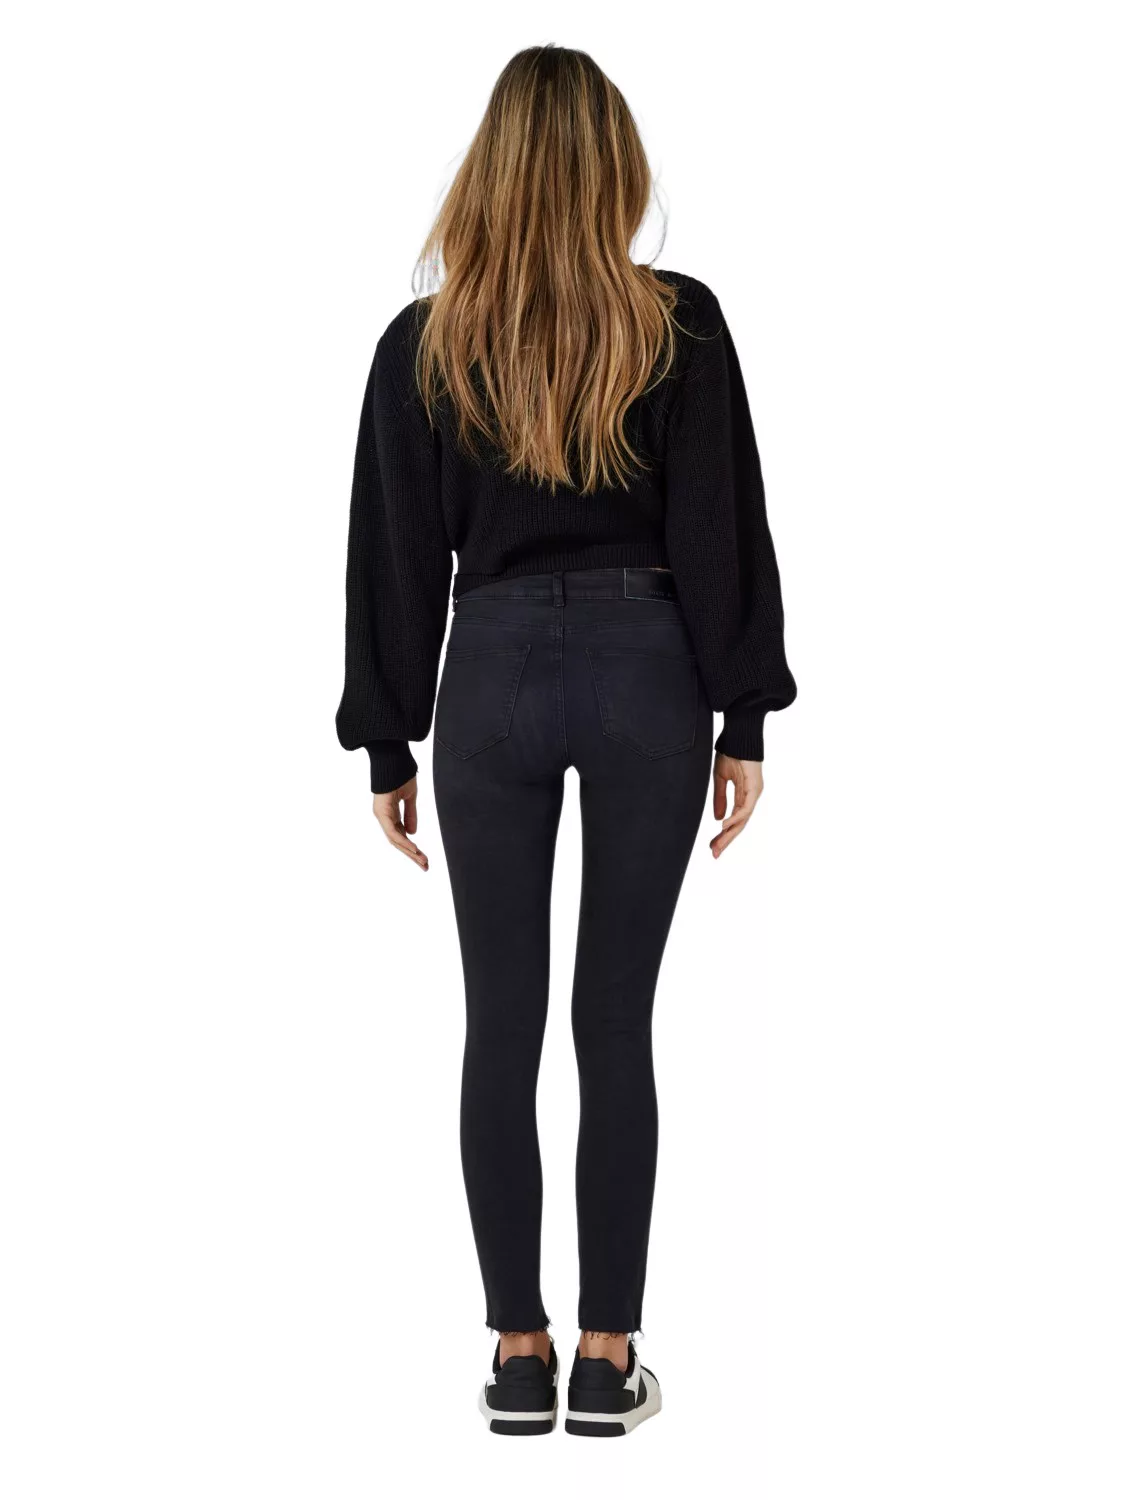 Noisy May Lucy Normal Waist Ankle Az088bl Jeans 26 Black Denim günstig online kaufen